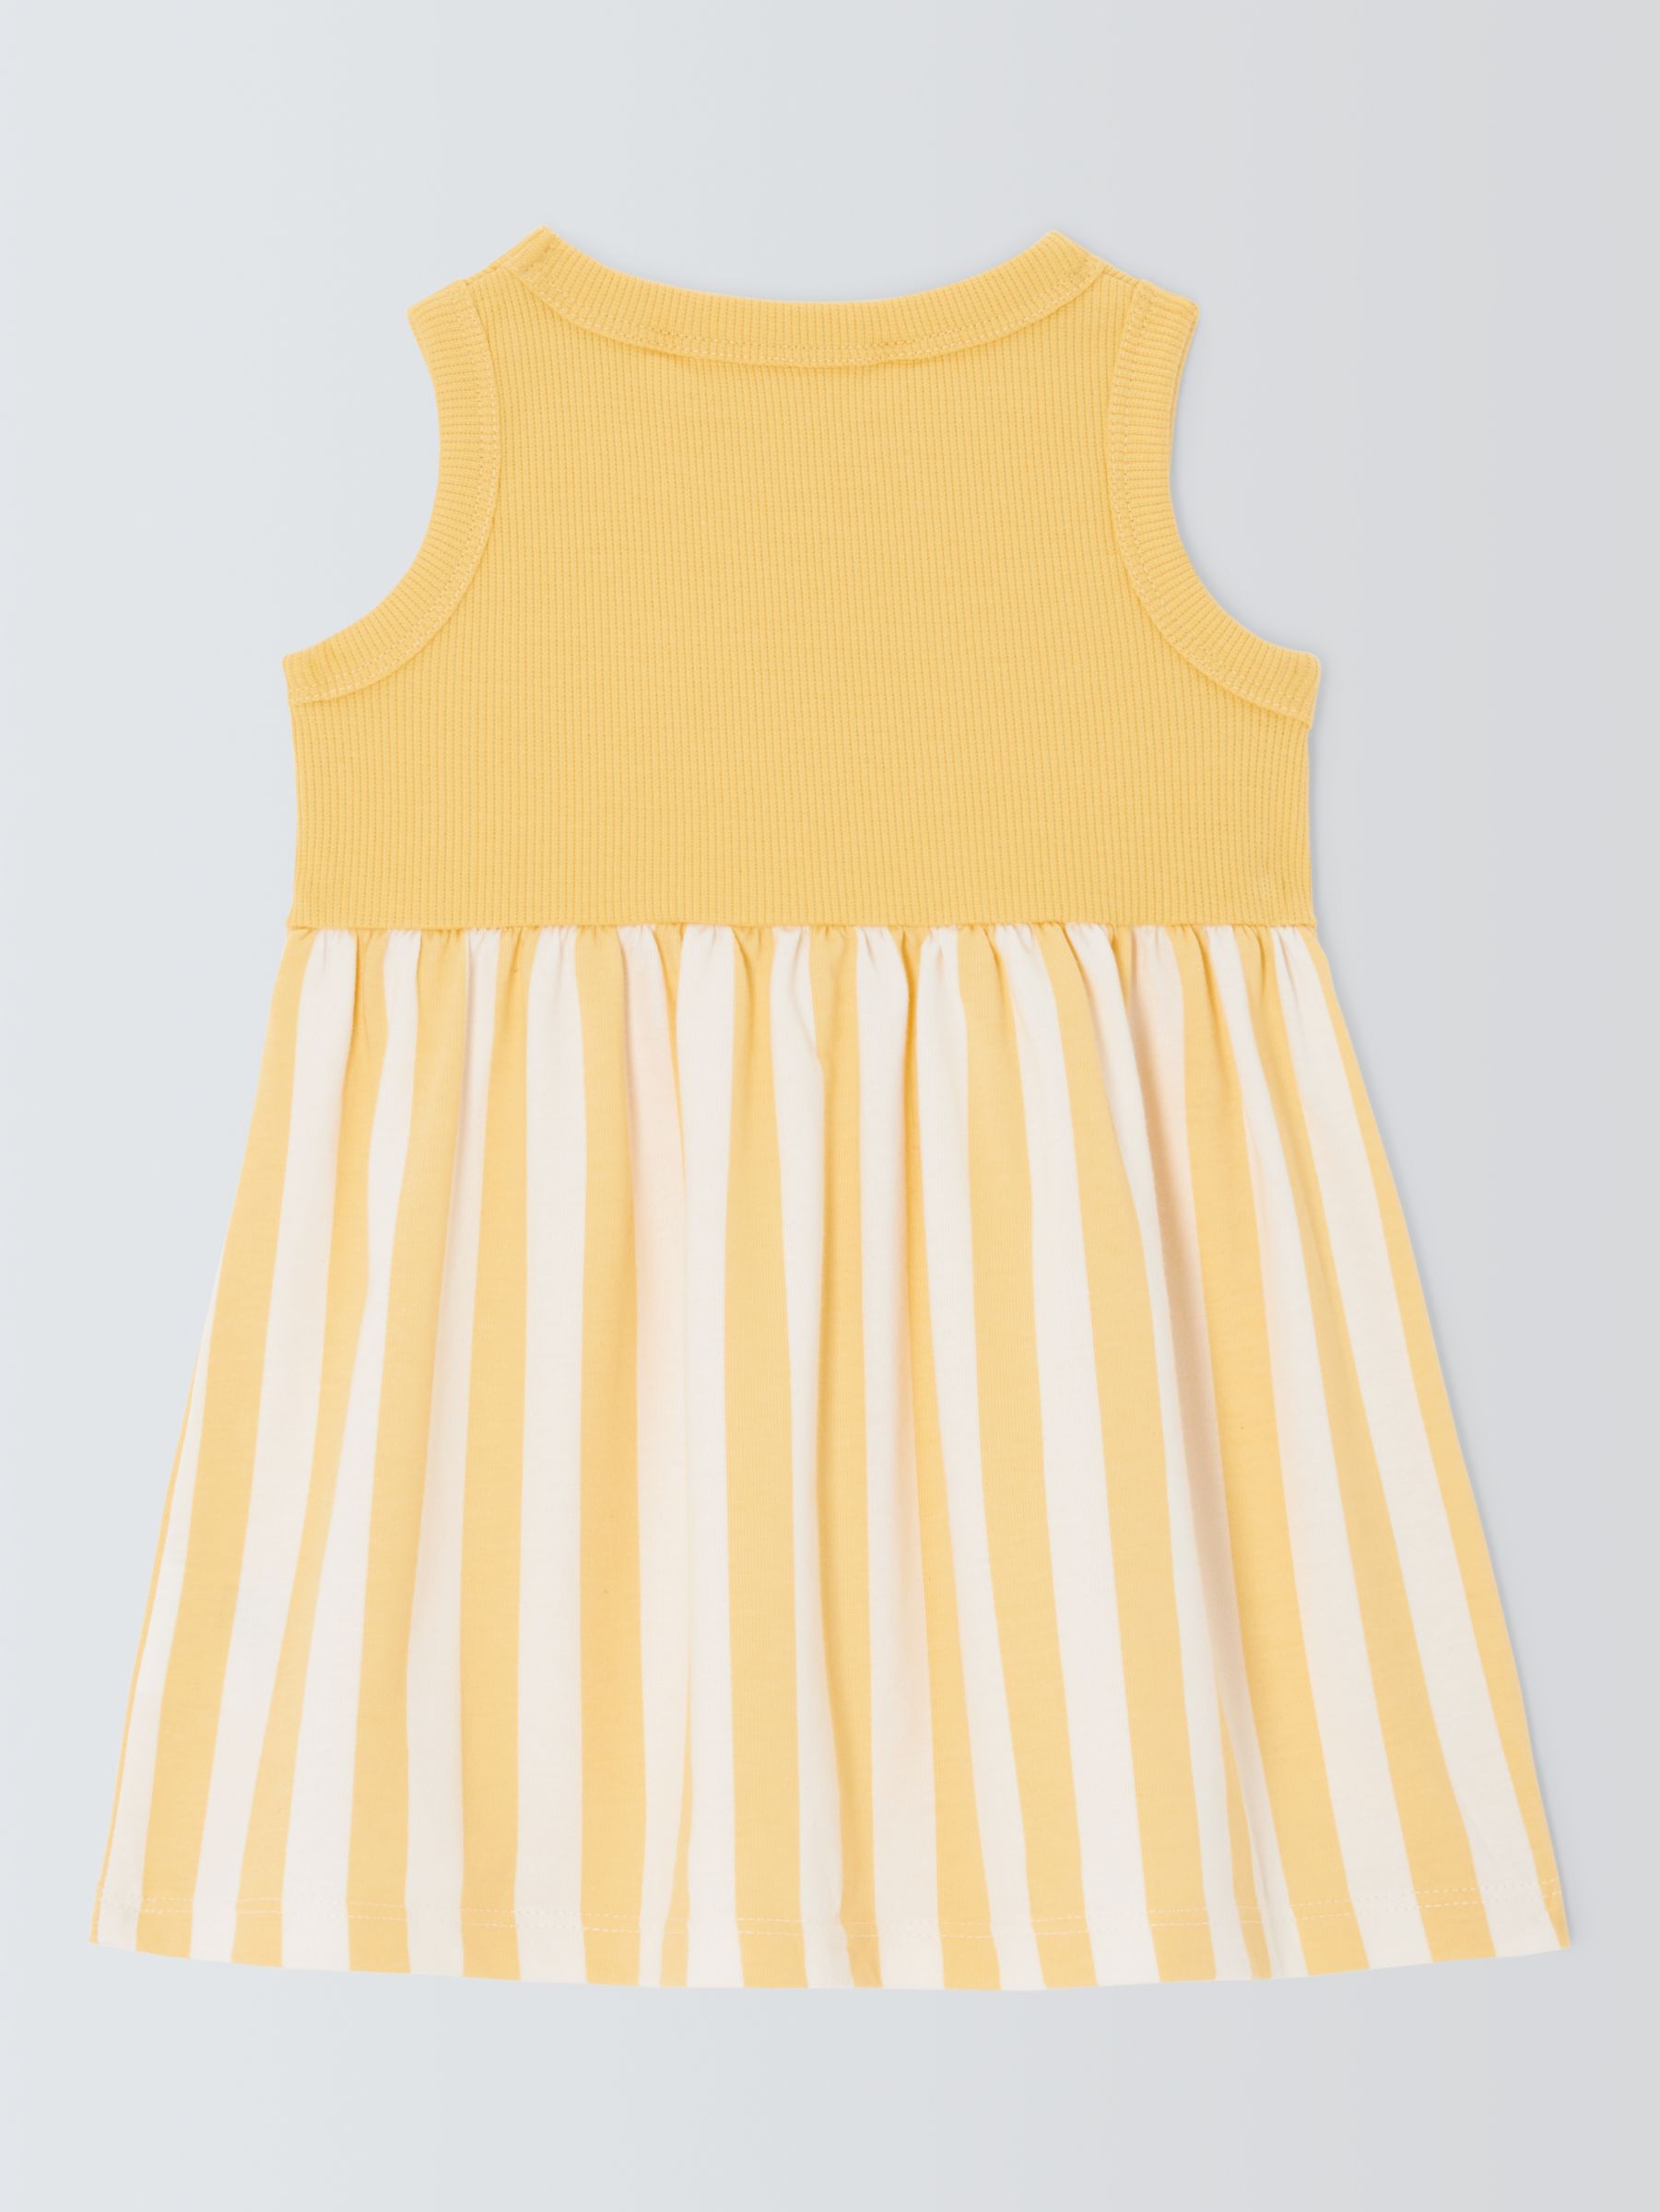 John Lewis ANYDAY Baby Stripe Dress, Yellow, 3-6 months